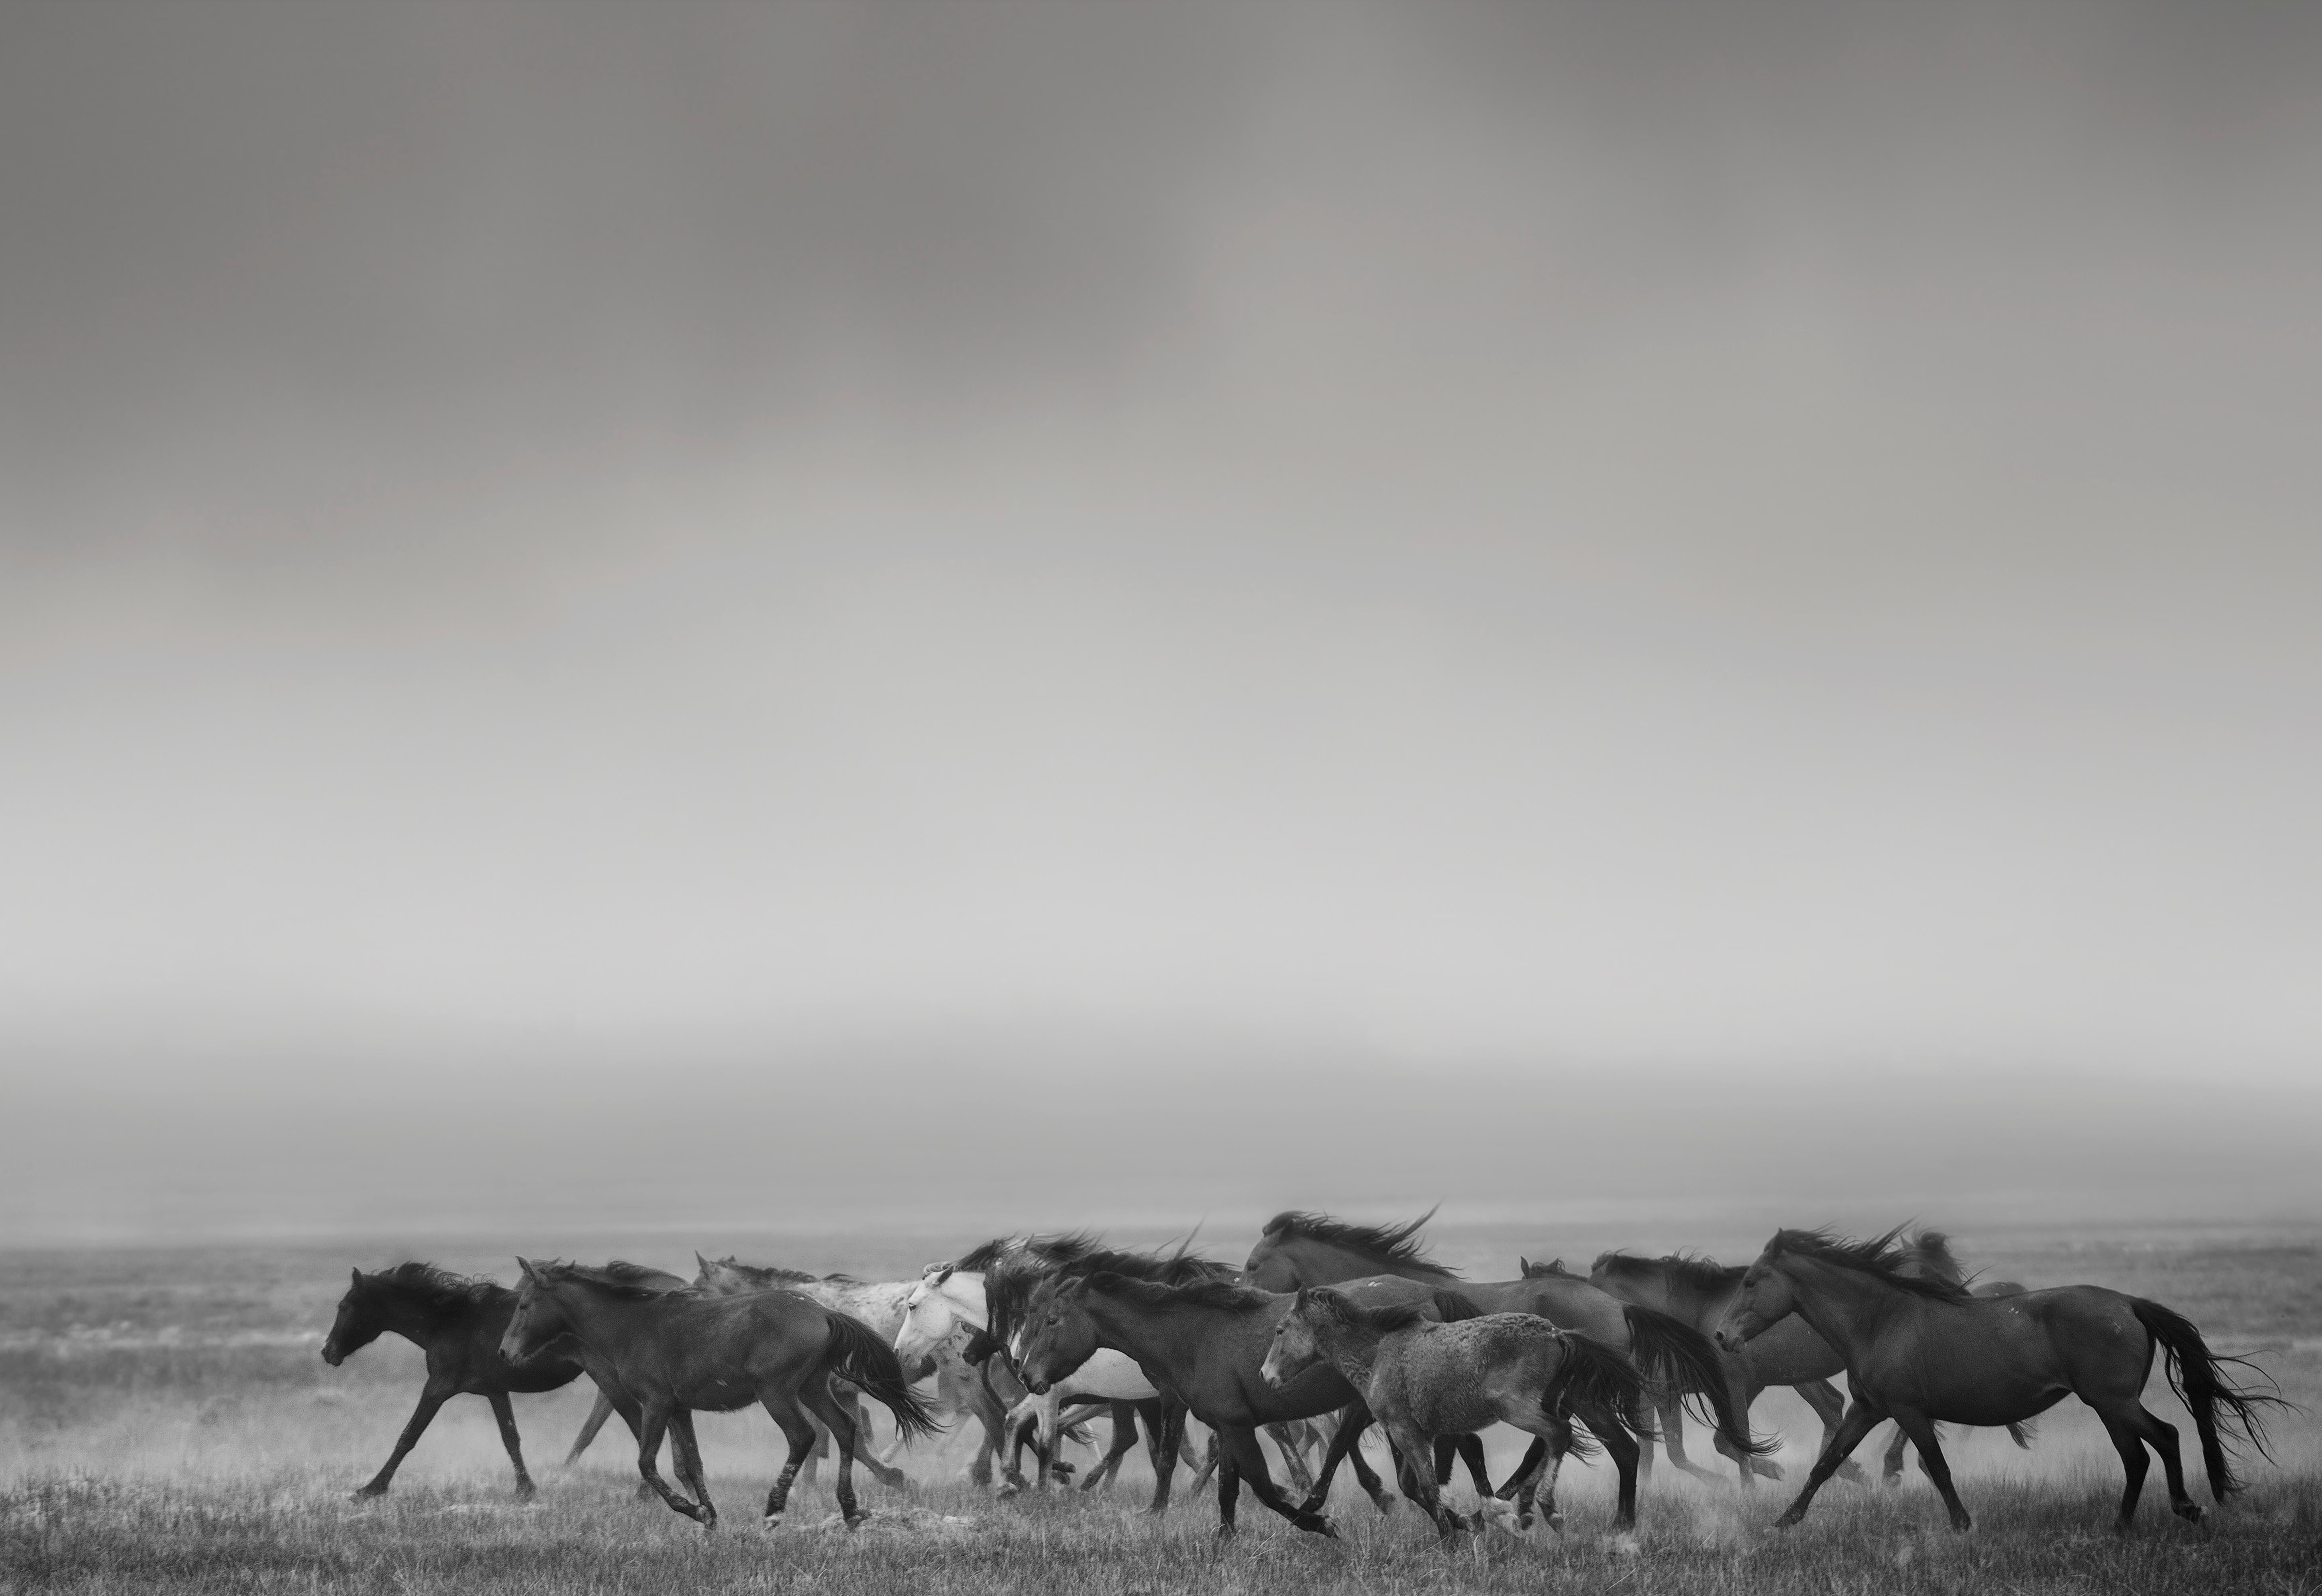 Animal Print Shane Russeck - "Dream State" - Photographie noir et blanc 40x50 Chevaux sauvages Mustangs Non signé 